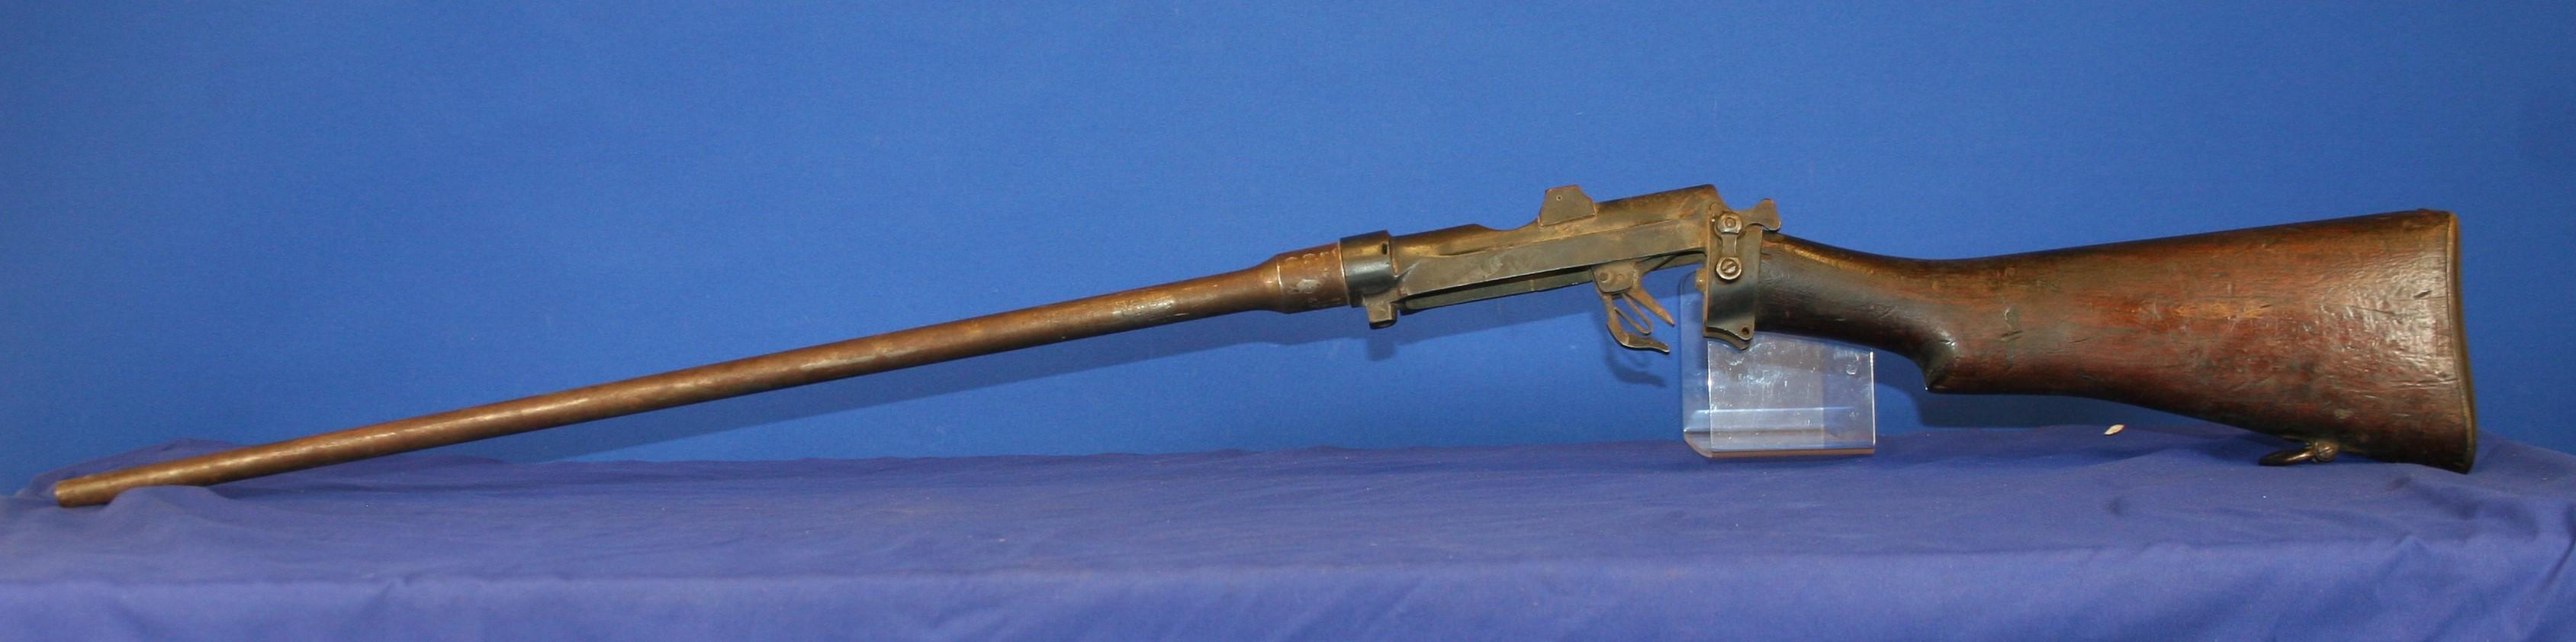 Enfield SMLE III 303 Rifle SN# J209